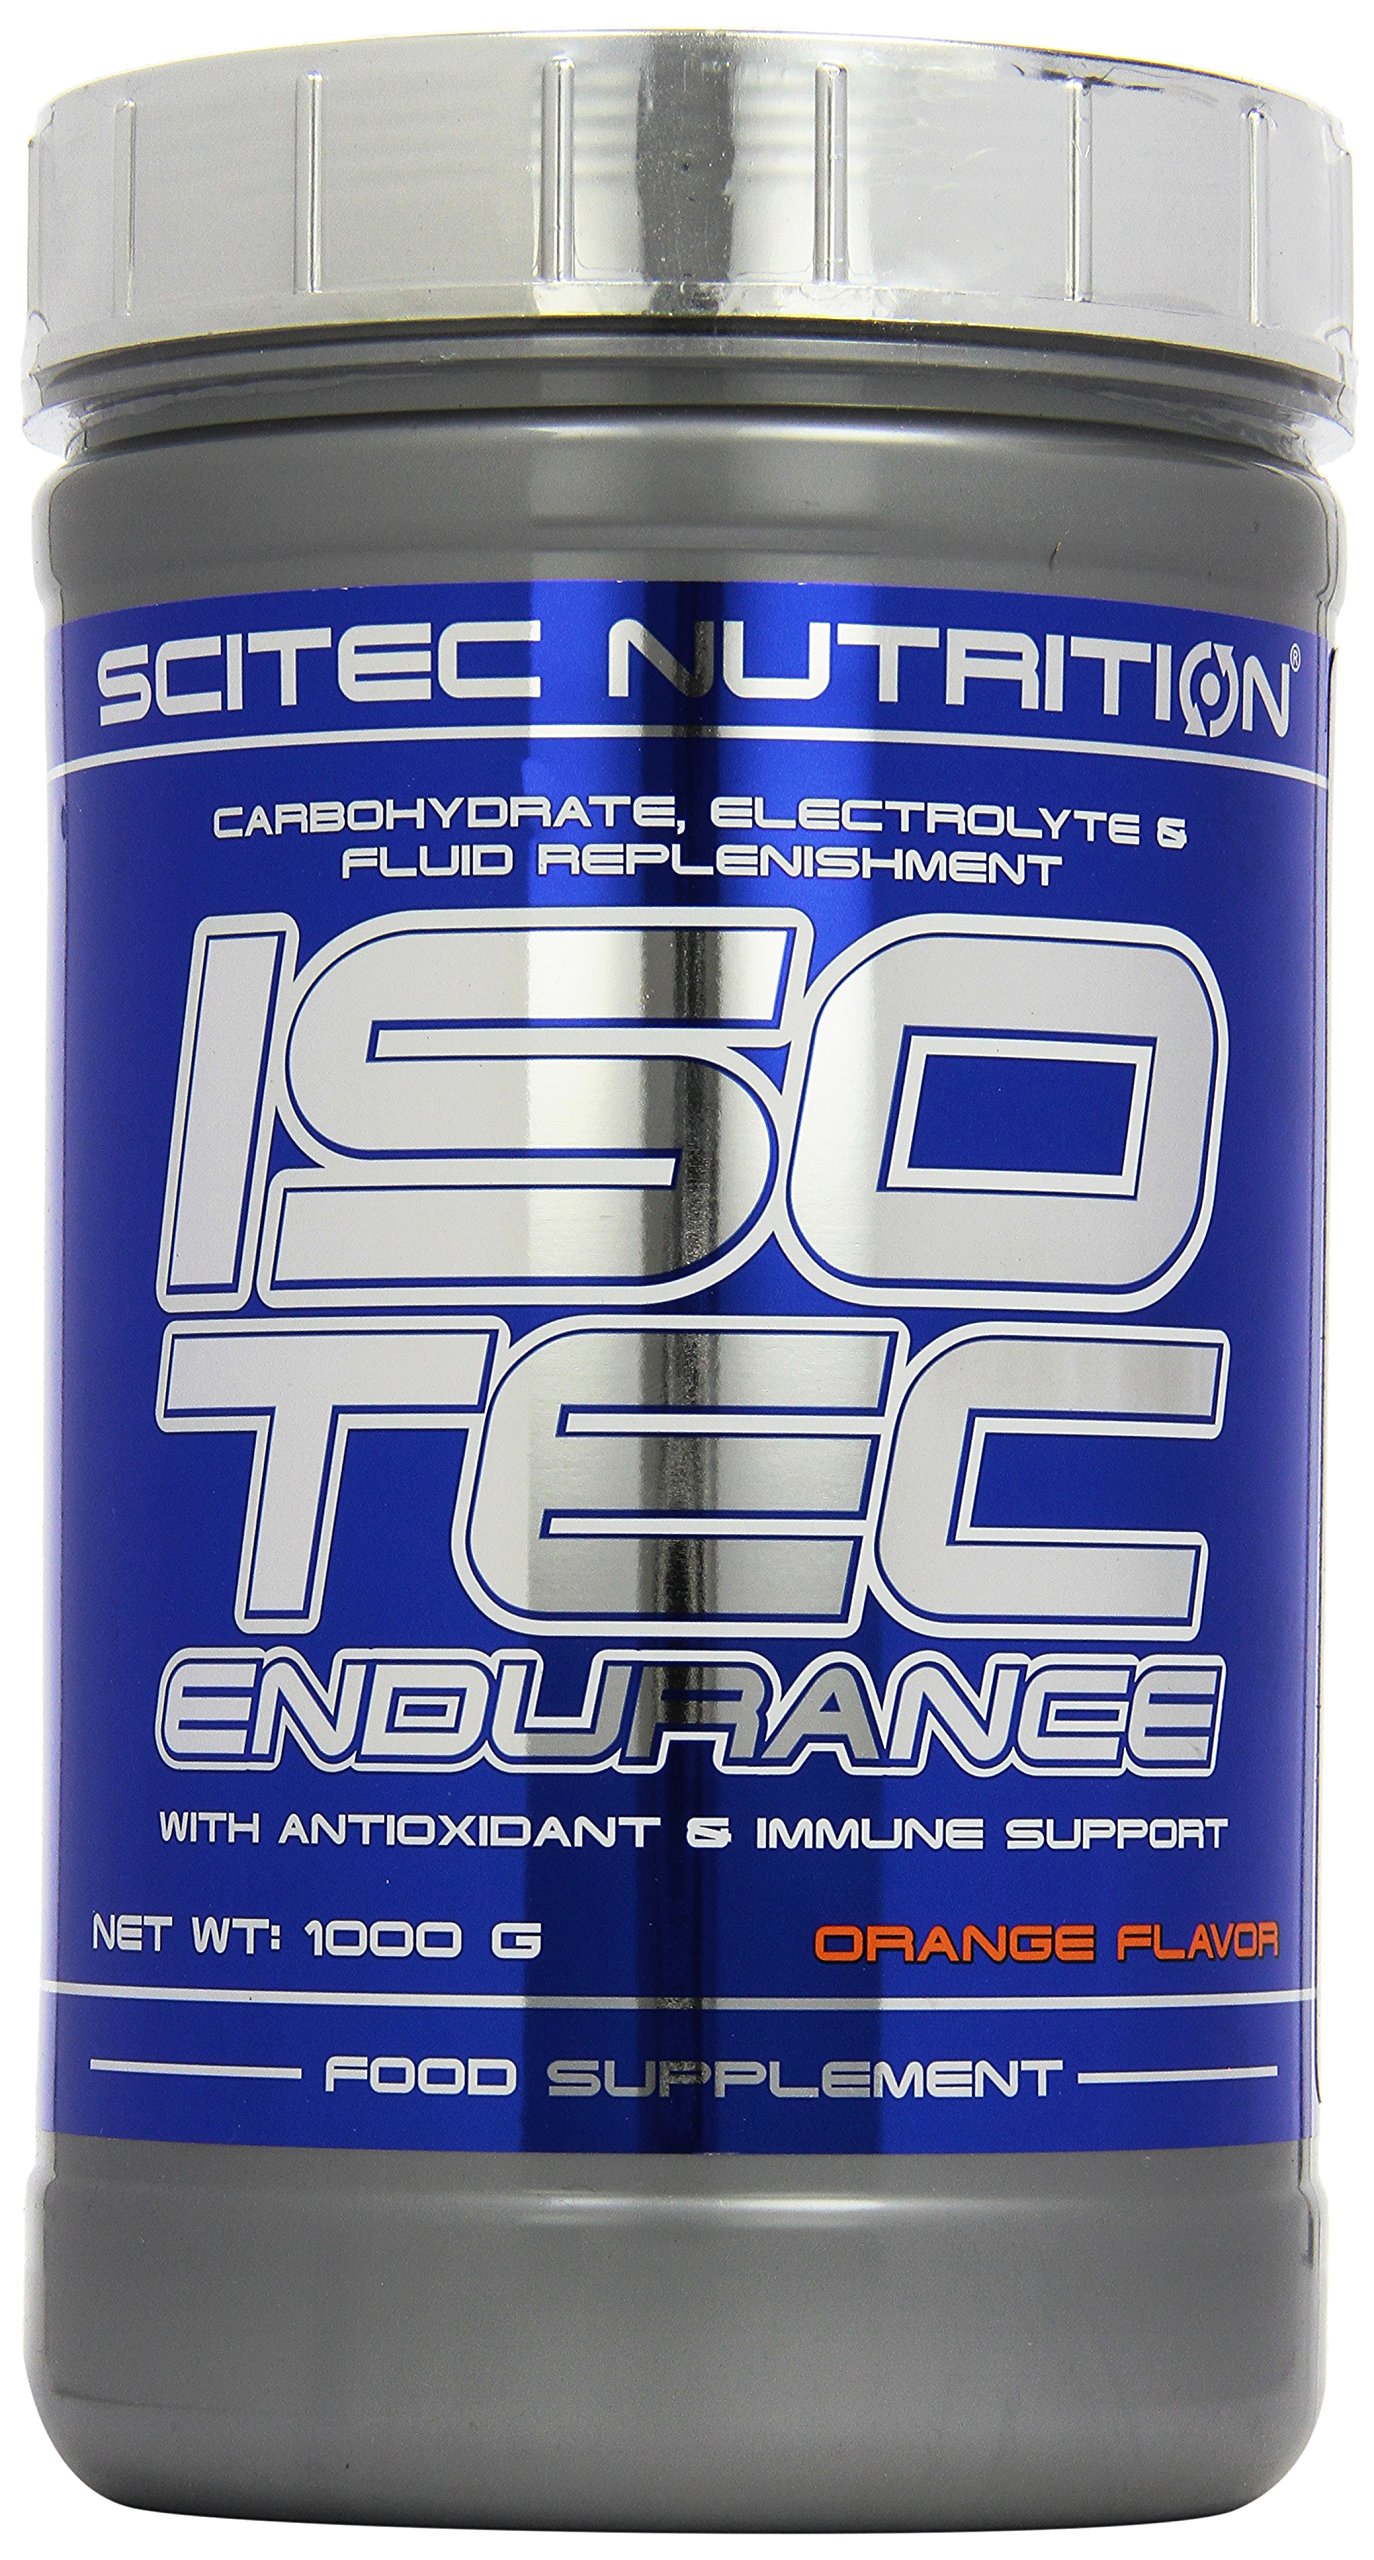 Scitec Nutrition Isotec Endurance 1000g orange